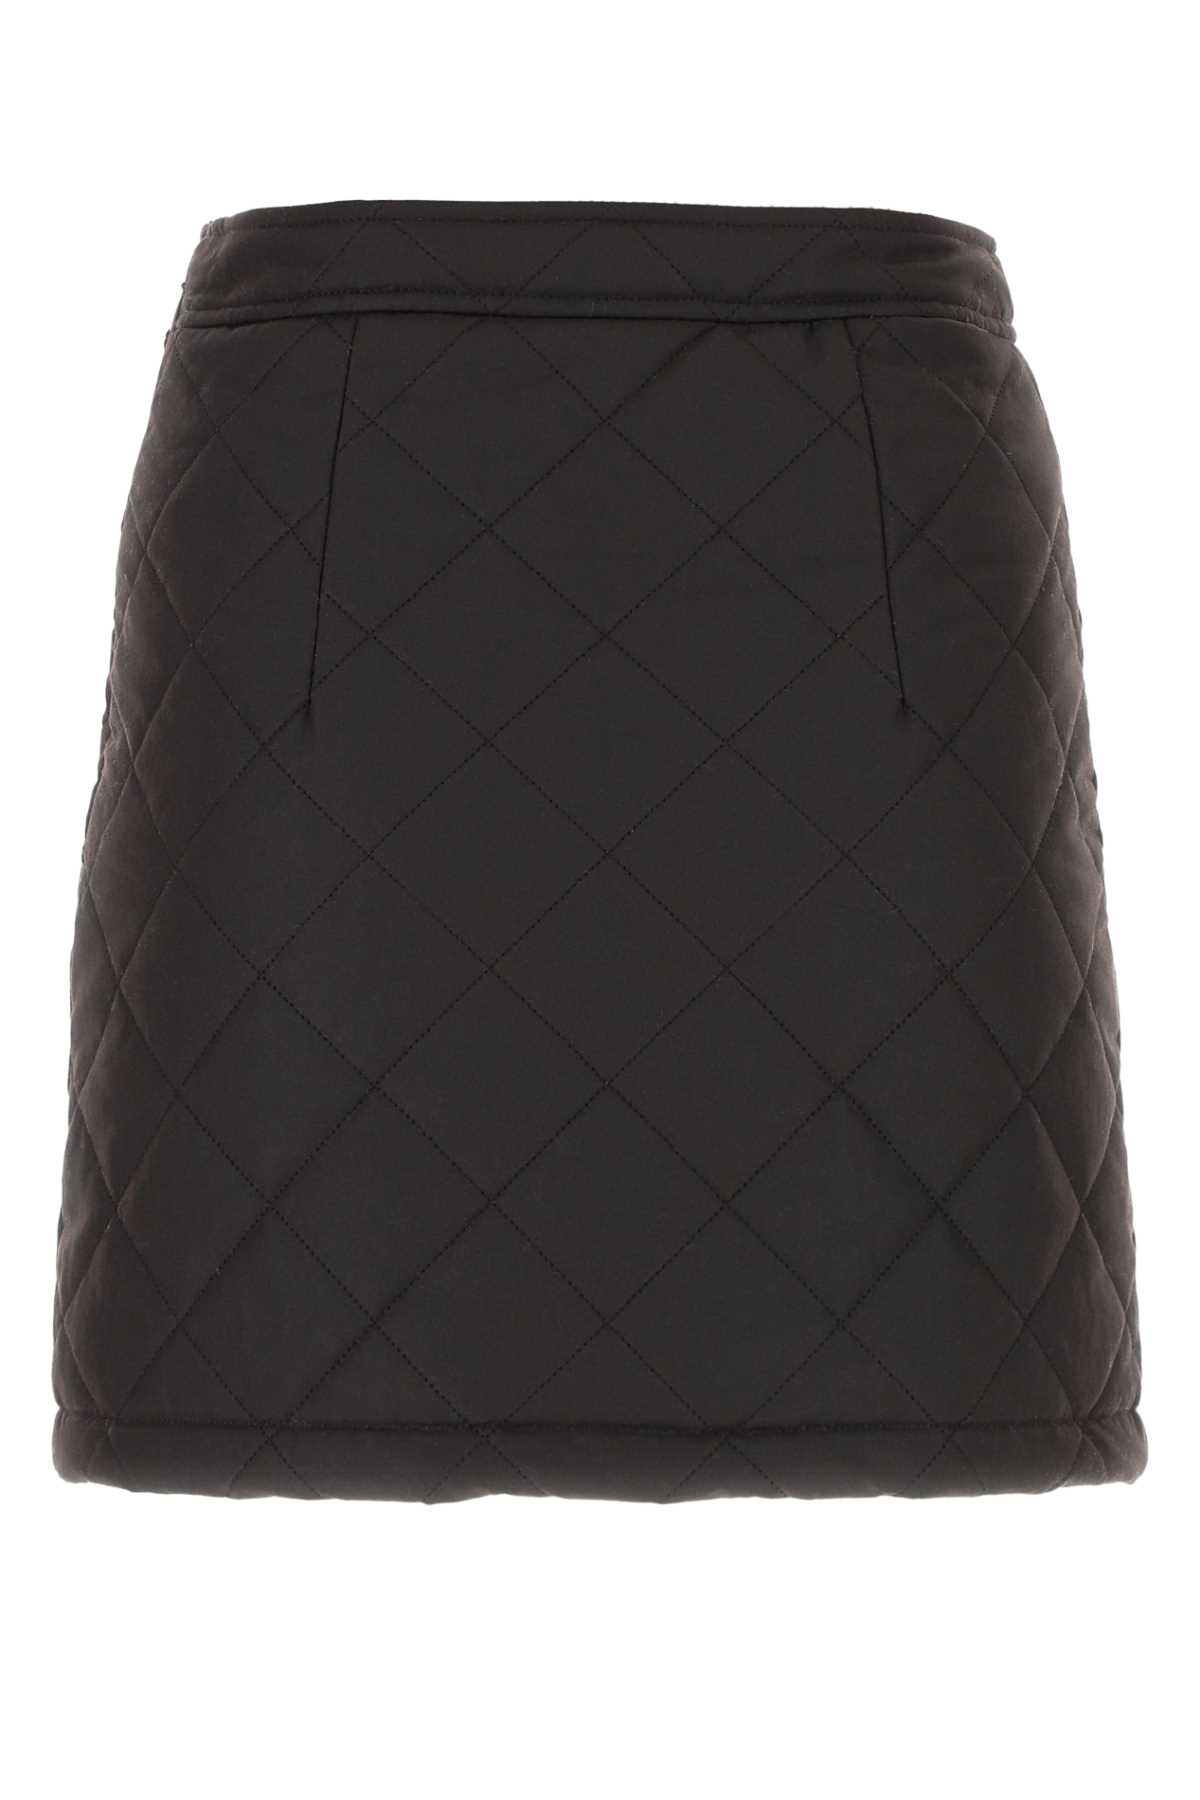 Burberry Dark Brow Cotton Mini Skirt In A1276